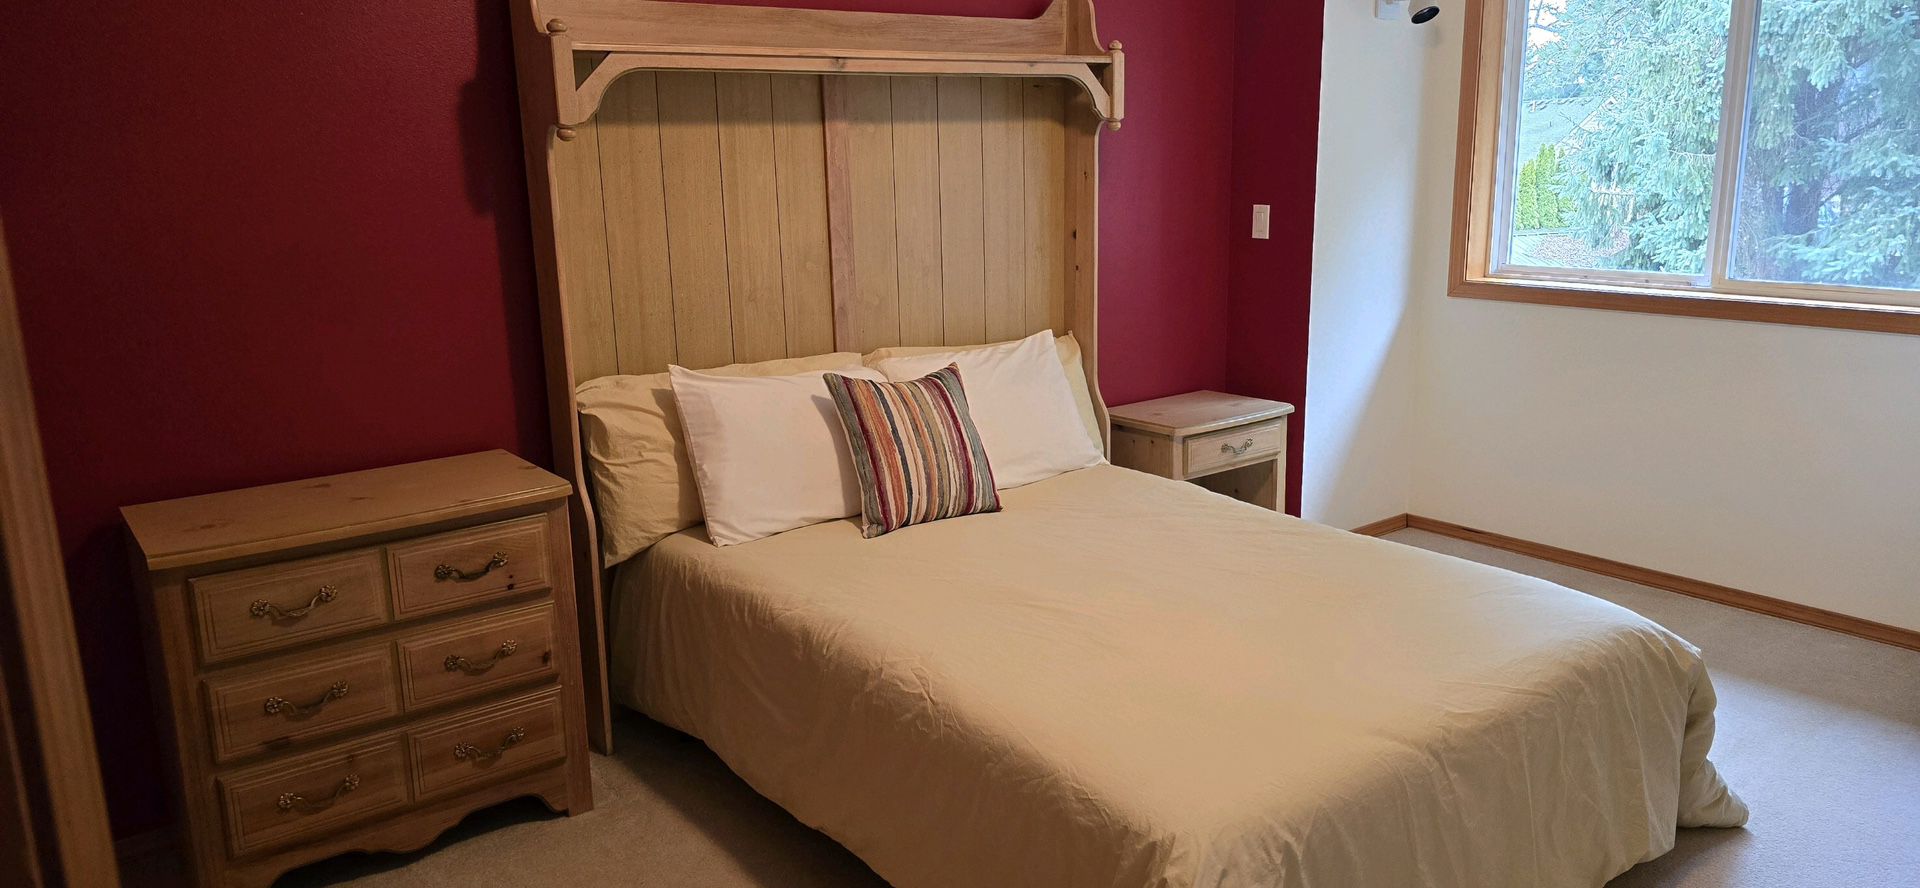 FREE Beautiful 5-piece Wood Bedroom Set